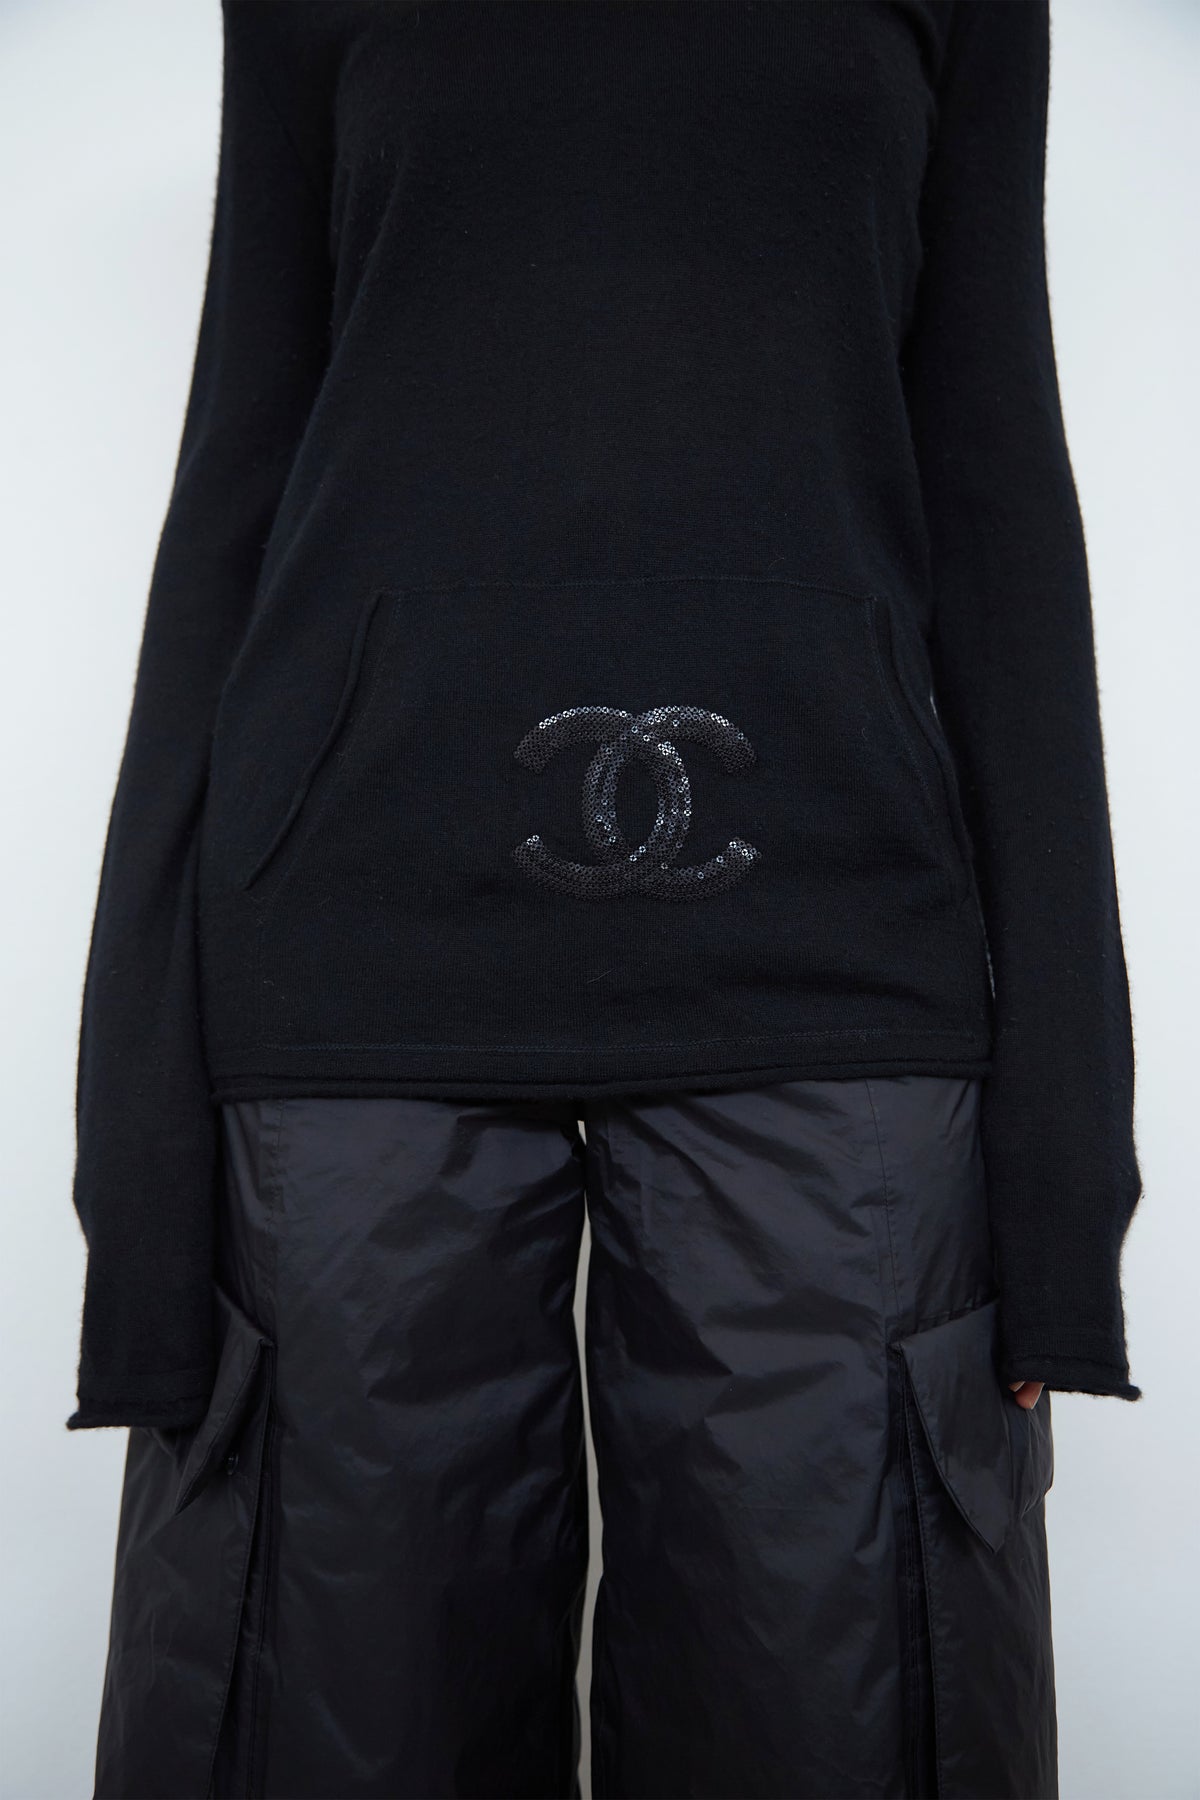 Chanel hoodie